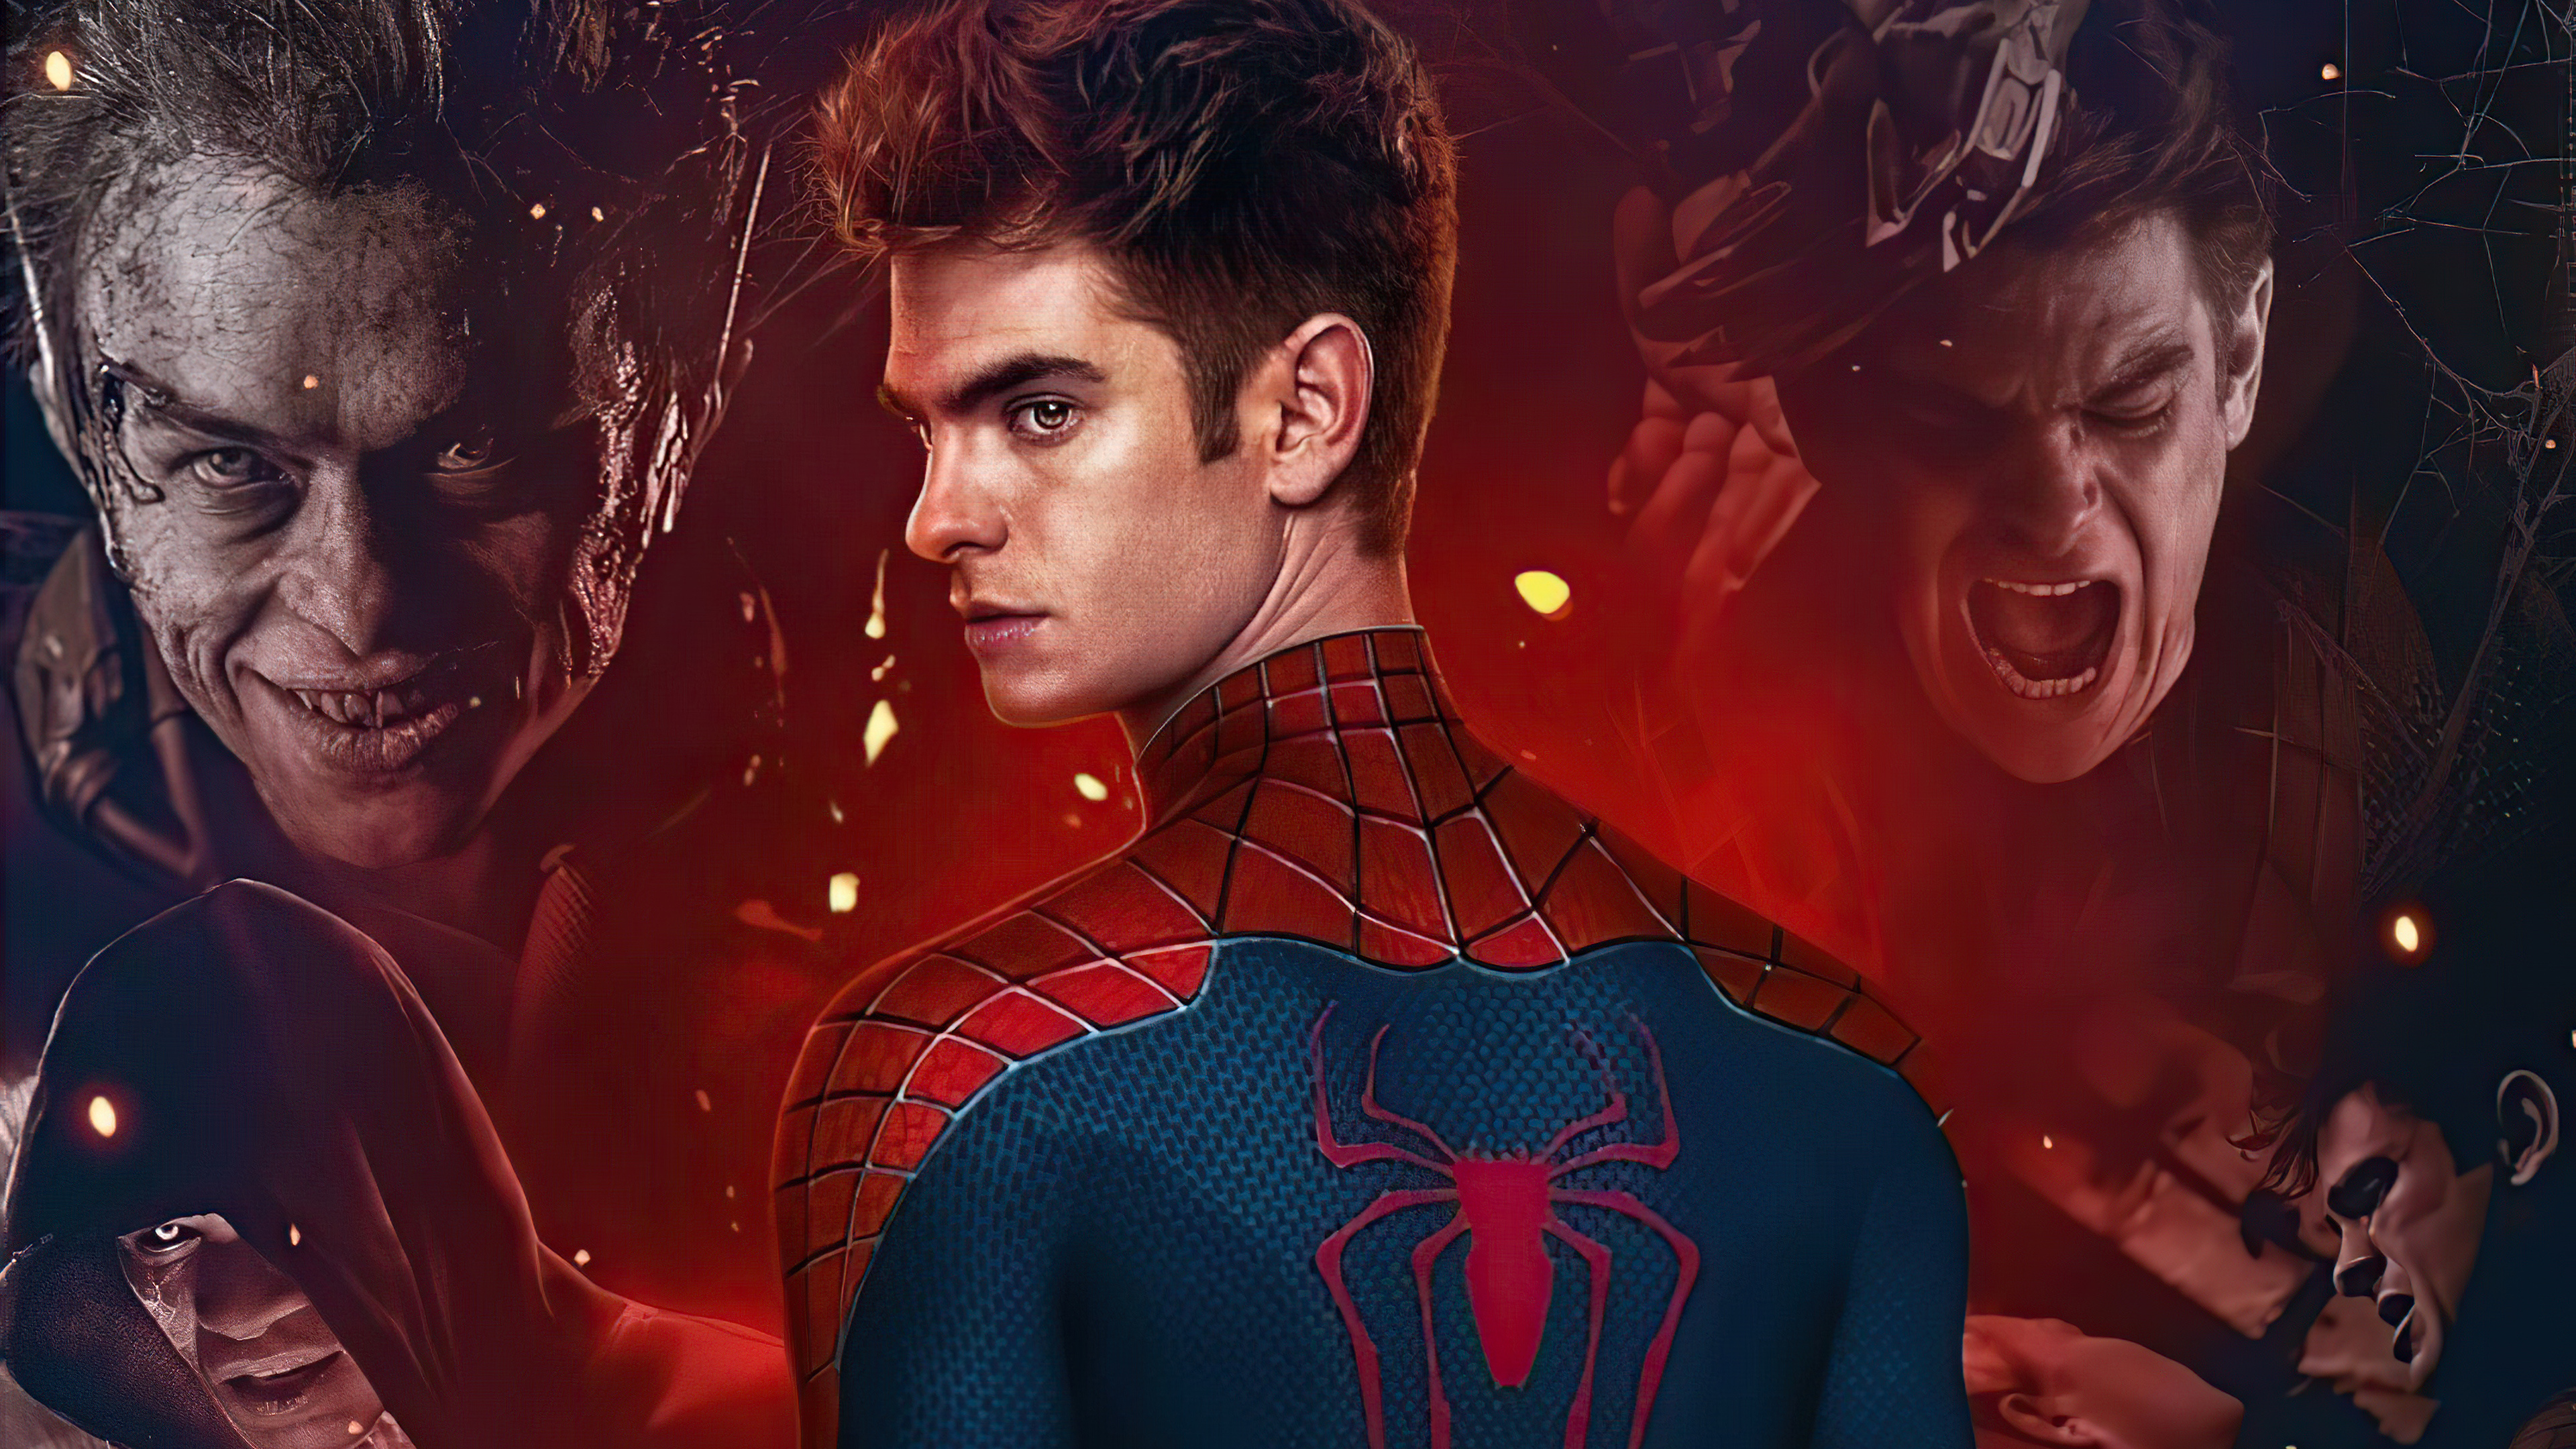 Andrew Garfield as Spiderman, High-definition resolution, Striking wallpapers, Superhero portrayal, 3840x2160 4K Desktop